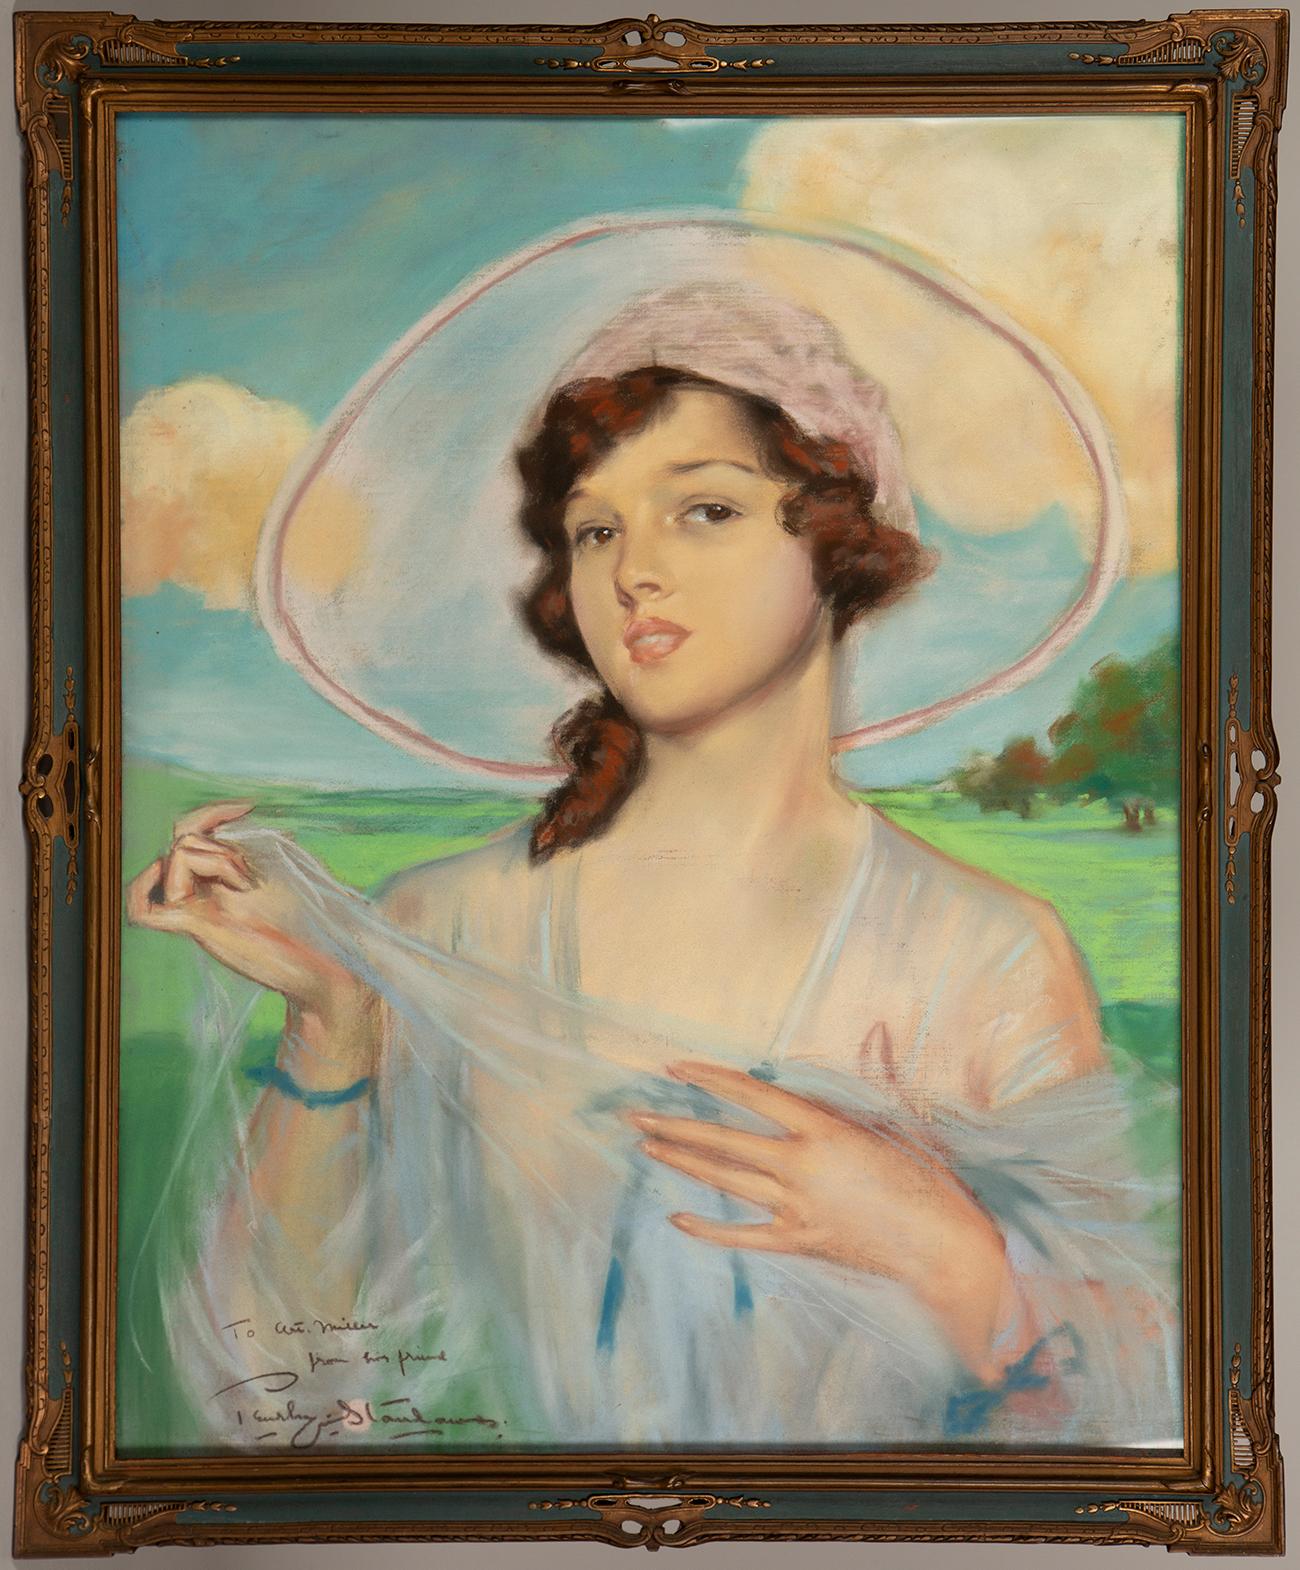 Penrhyn Stanlaws Portrait Painting - Elegant Hearst's Magazine Cover Girl